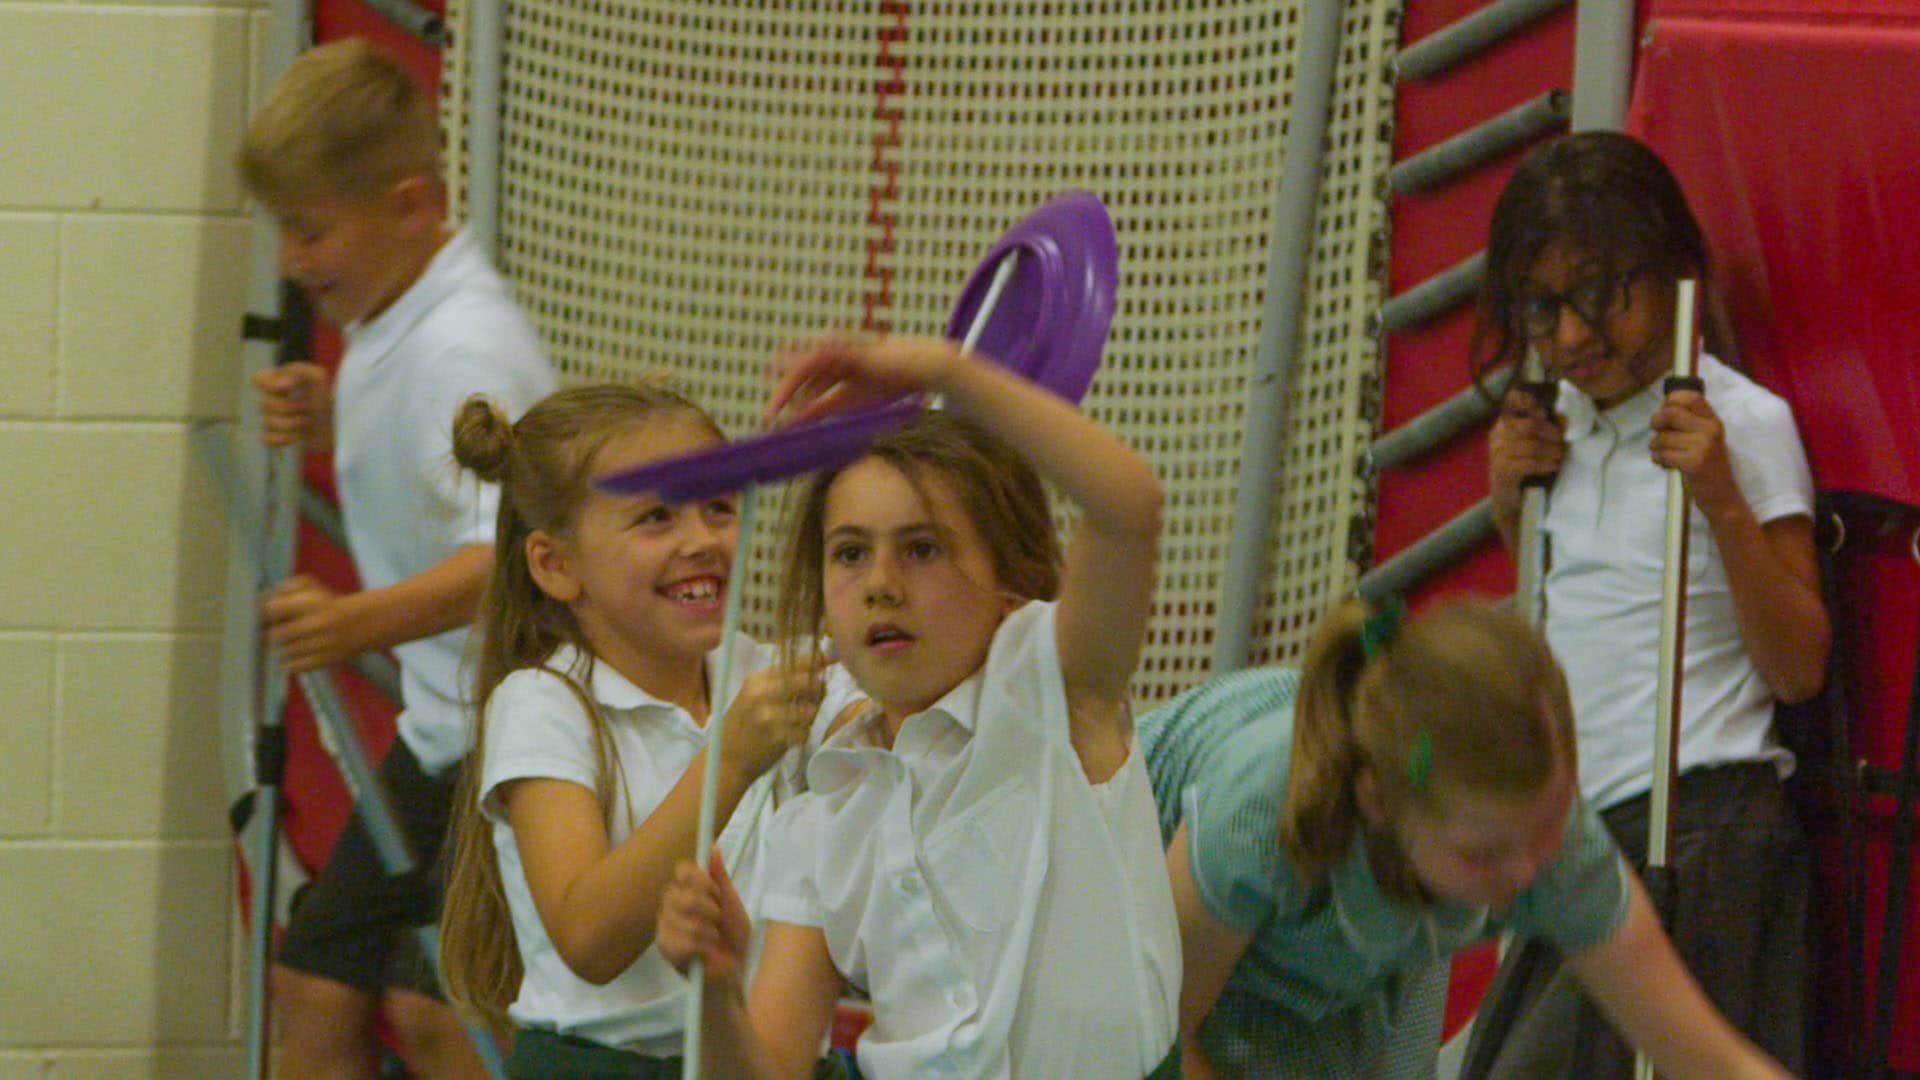 School children balancing purple plate in circus workshop